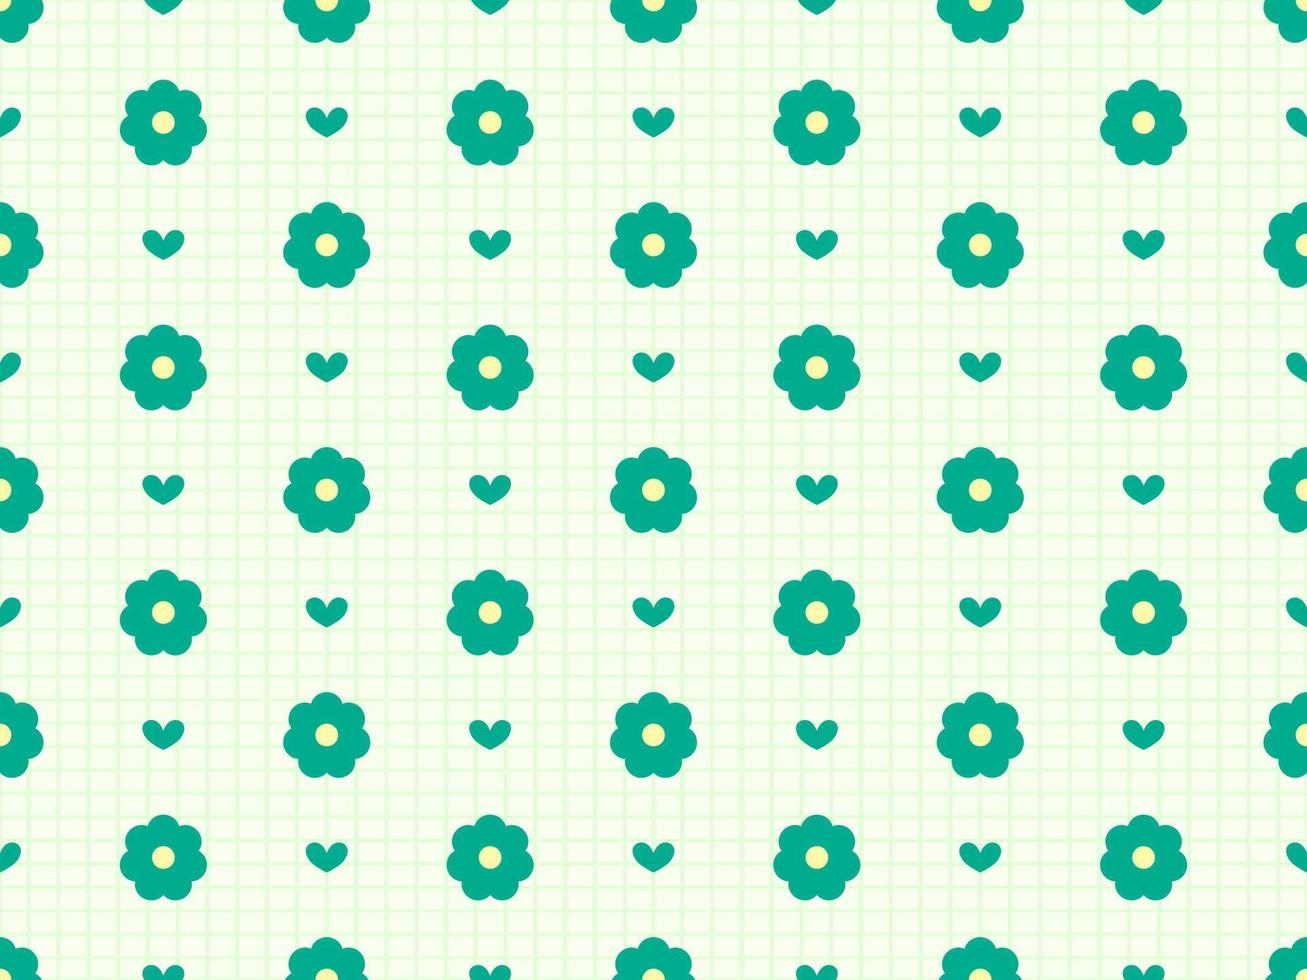 blomma seriefigur seamless mönster på grön bakgrund vektor